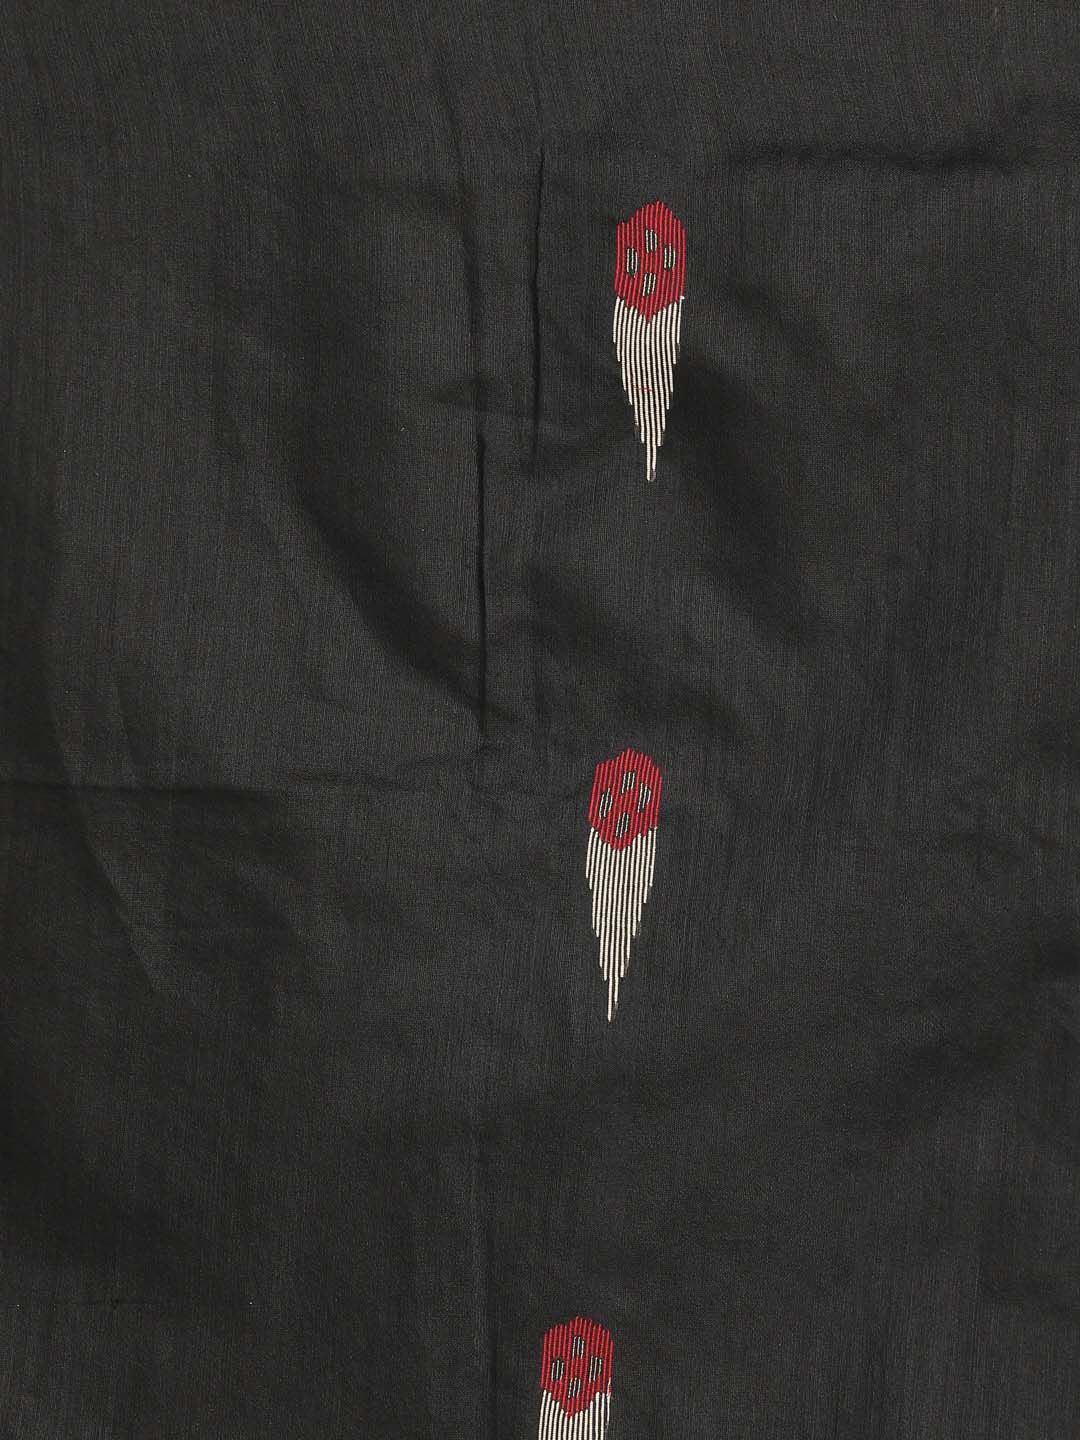 Indethnic Black Bengal Handloom Cotton Blend Work Saree - Saree Detail View